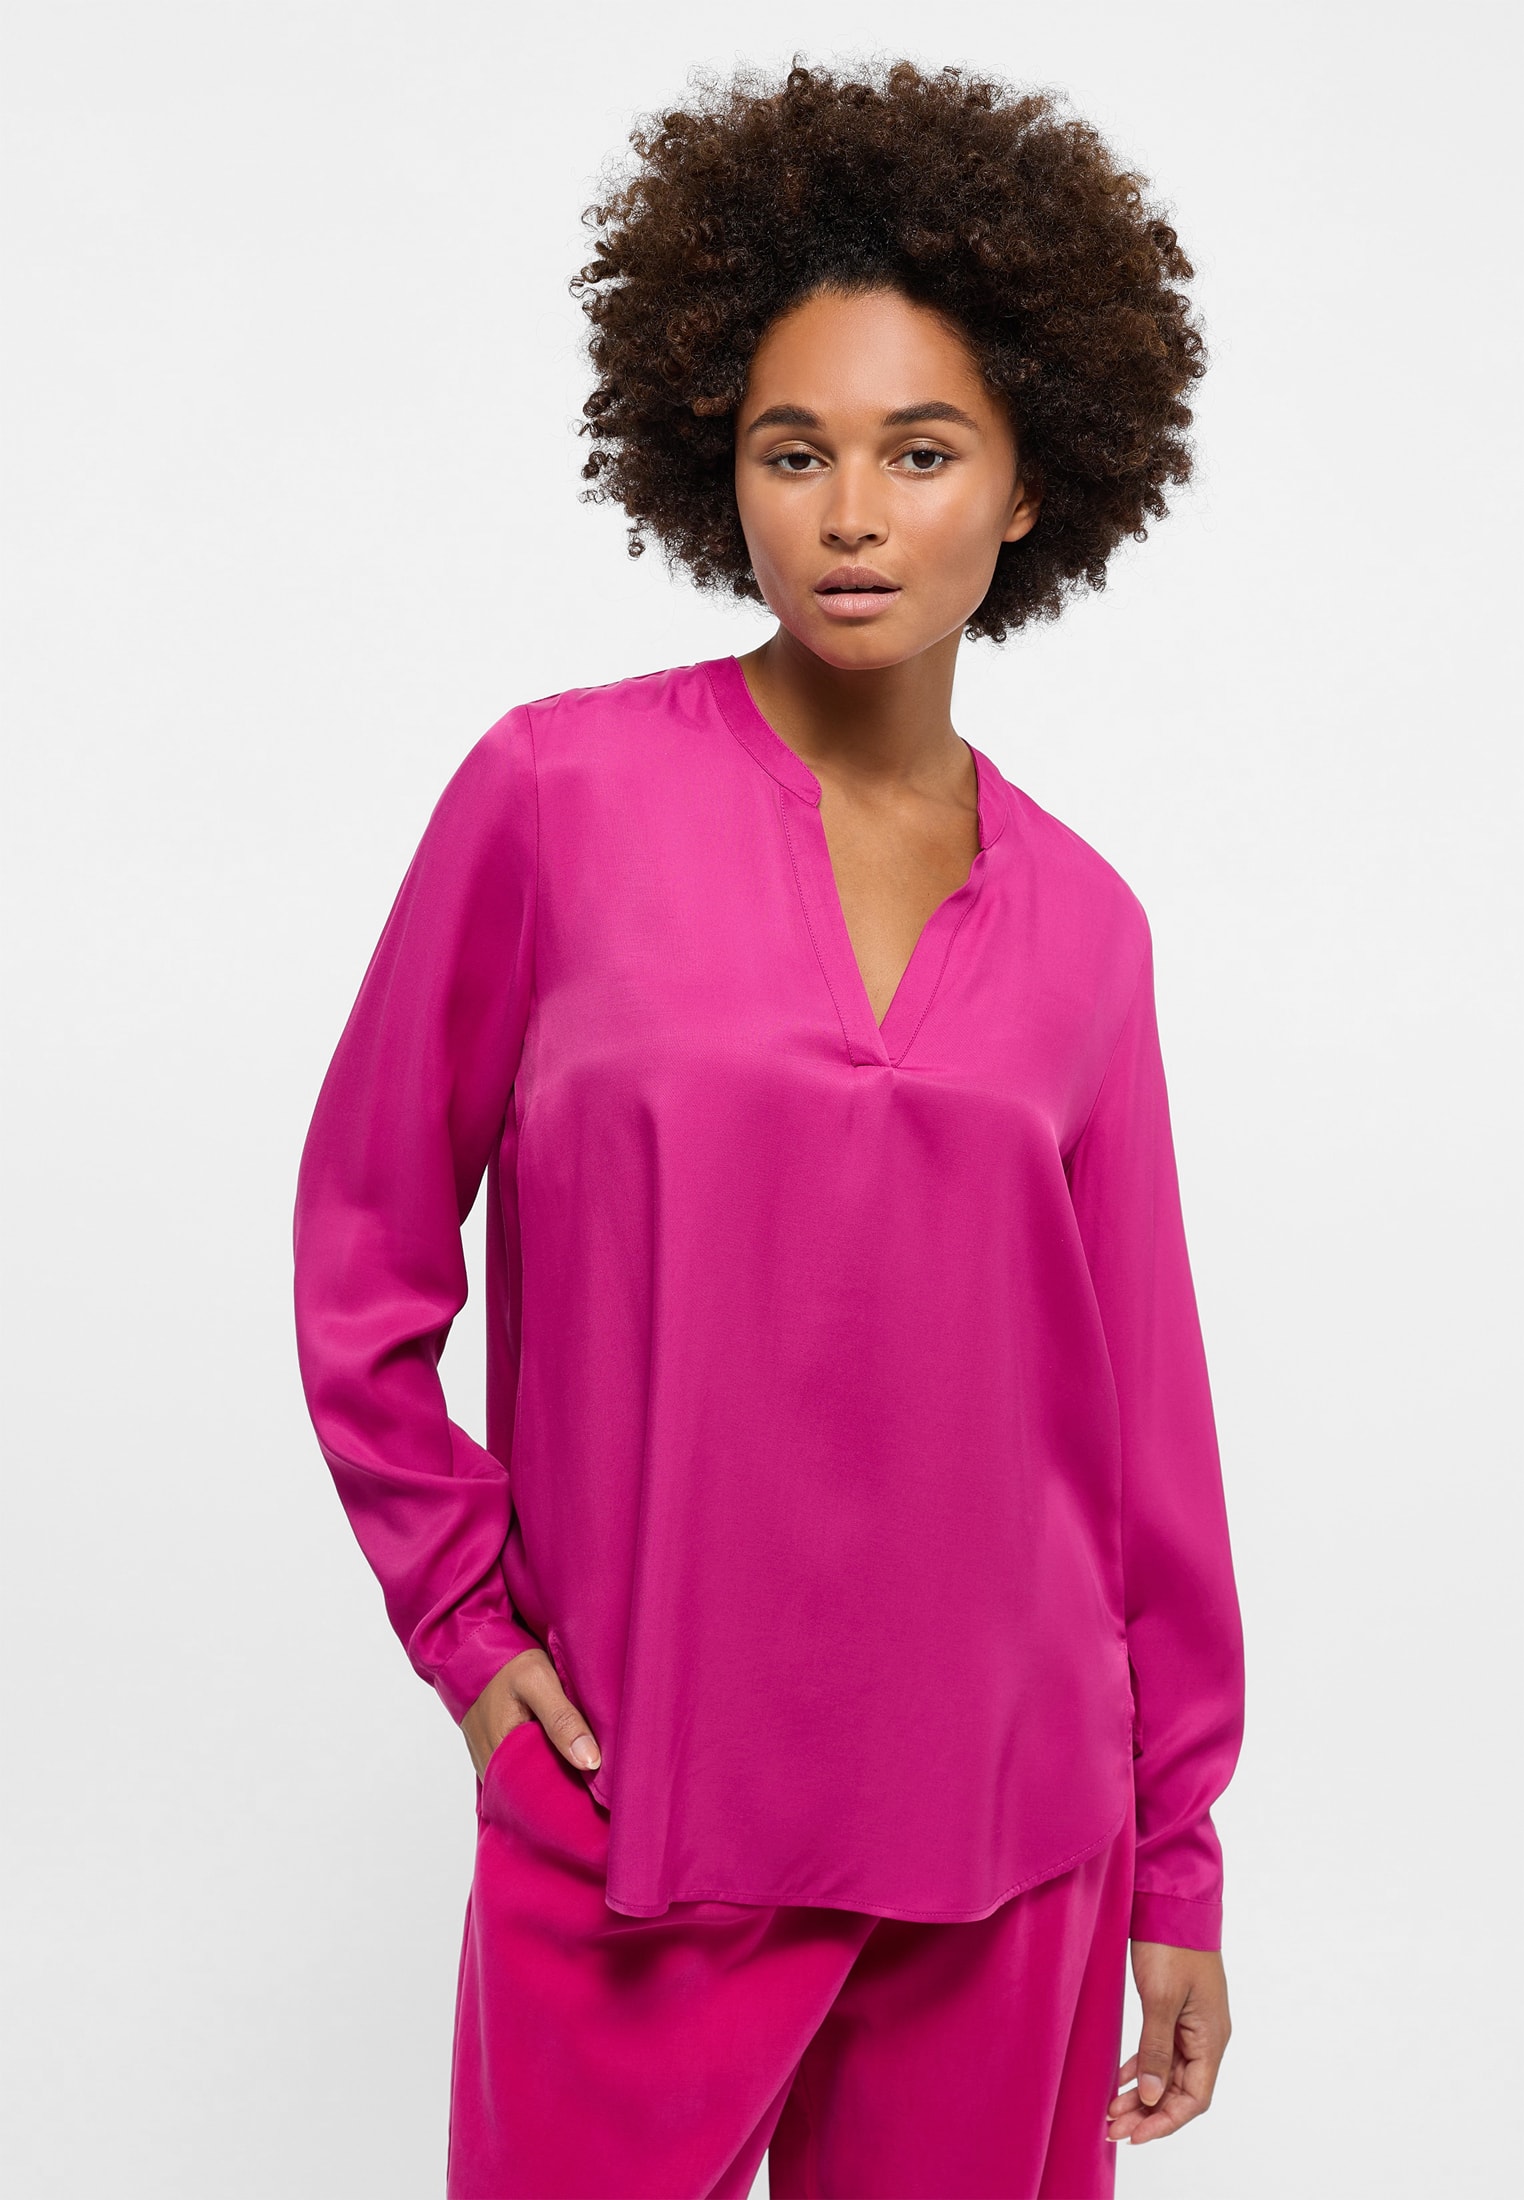 Viscose Shirt Bluse in vibrant pink unifarben | vibrant pink | 38 | Langarm  | 2BL00329-15-31-38-1/1